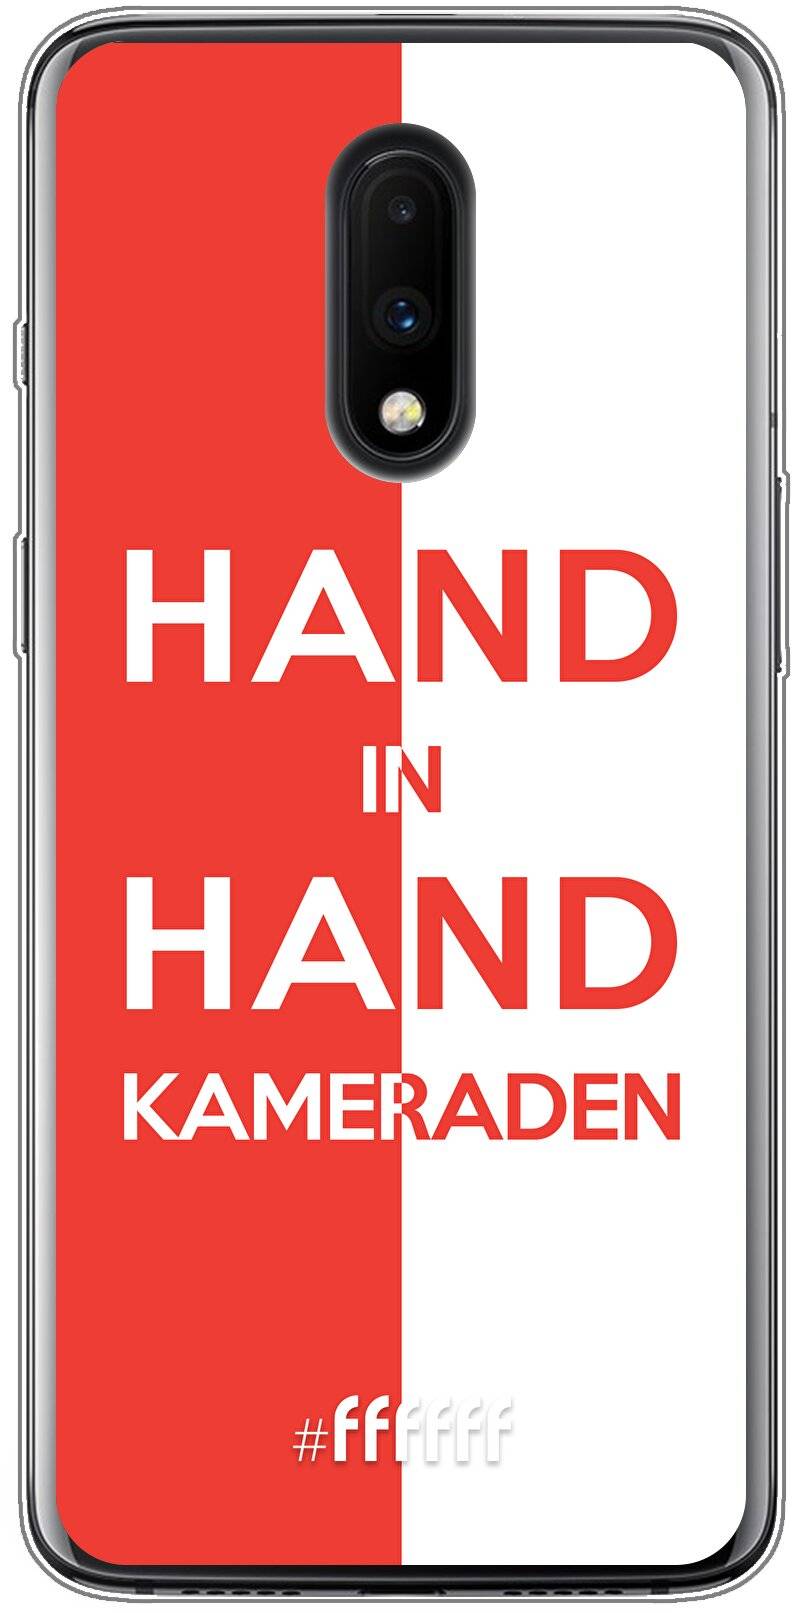 Feyenoord - Hand in hand, kameraden 7